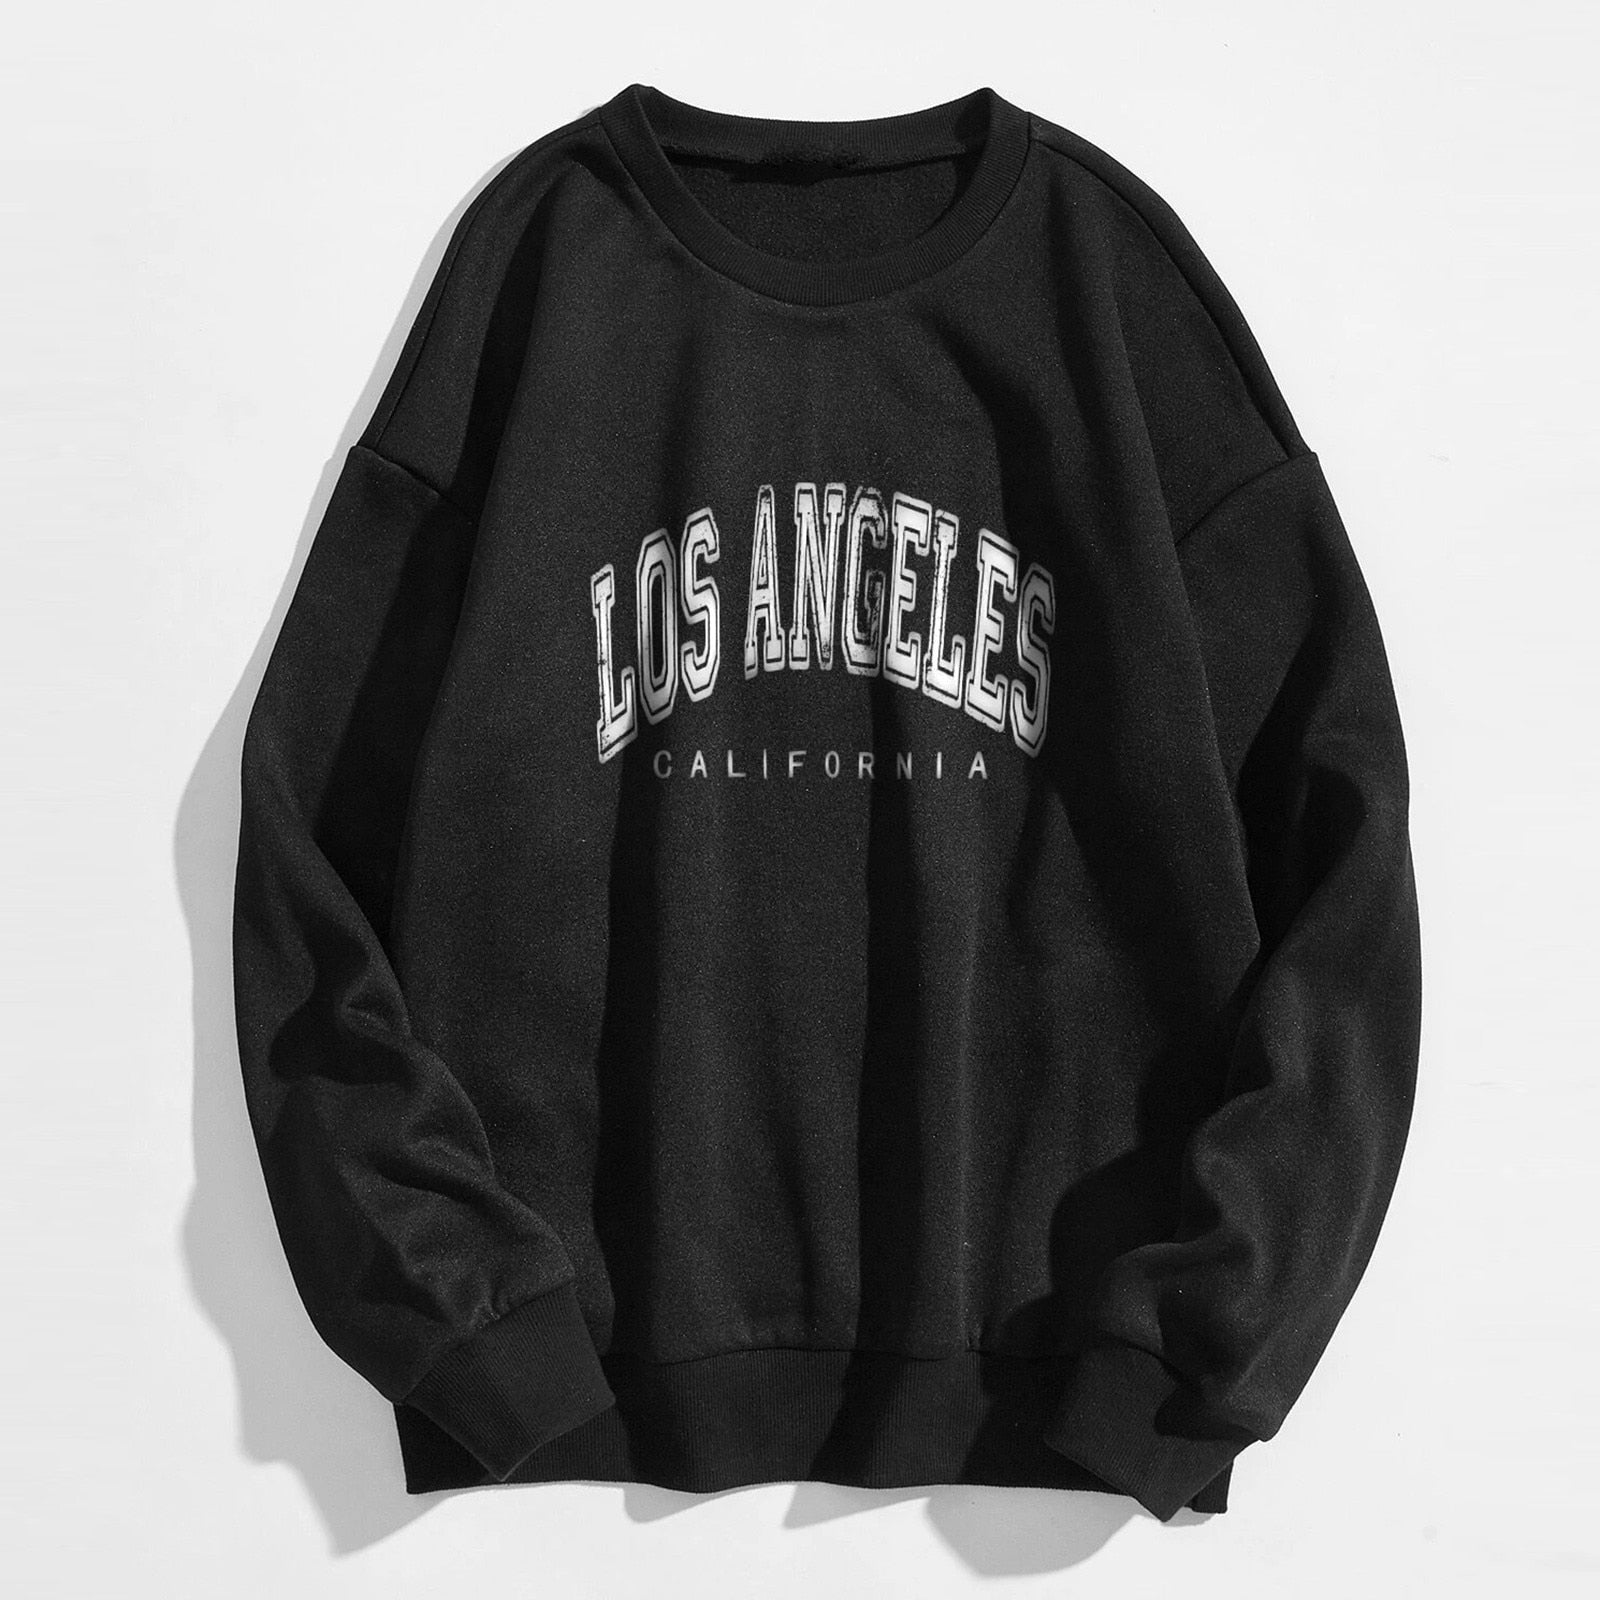 Bluza z napisem Los Angeles